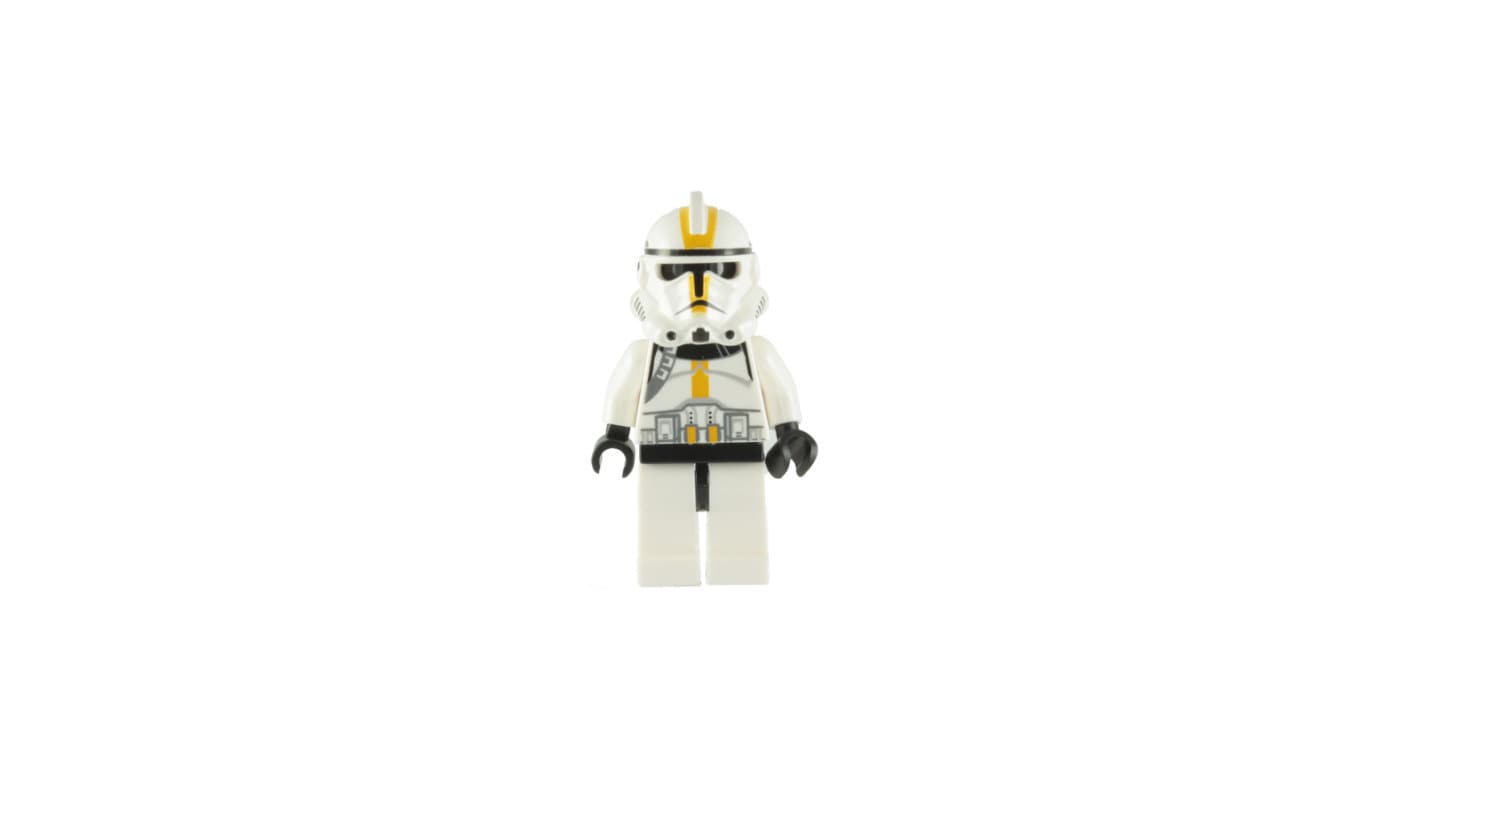 Recollection te hektar Lego Star Wars MINIFIGURE Clone Trooper Episode 3 Yellow - Etsy Israel